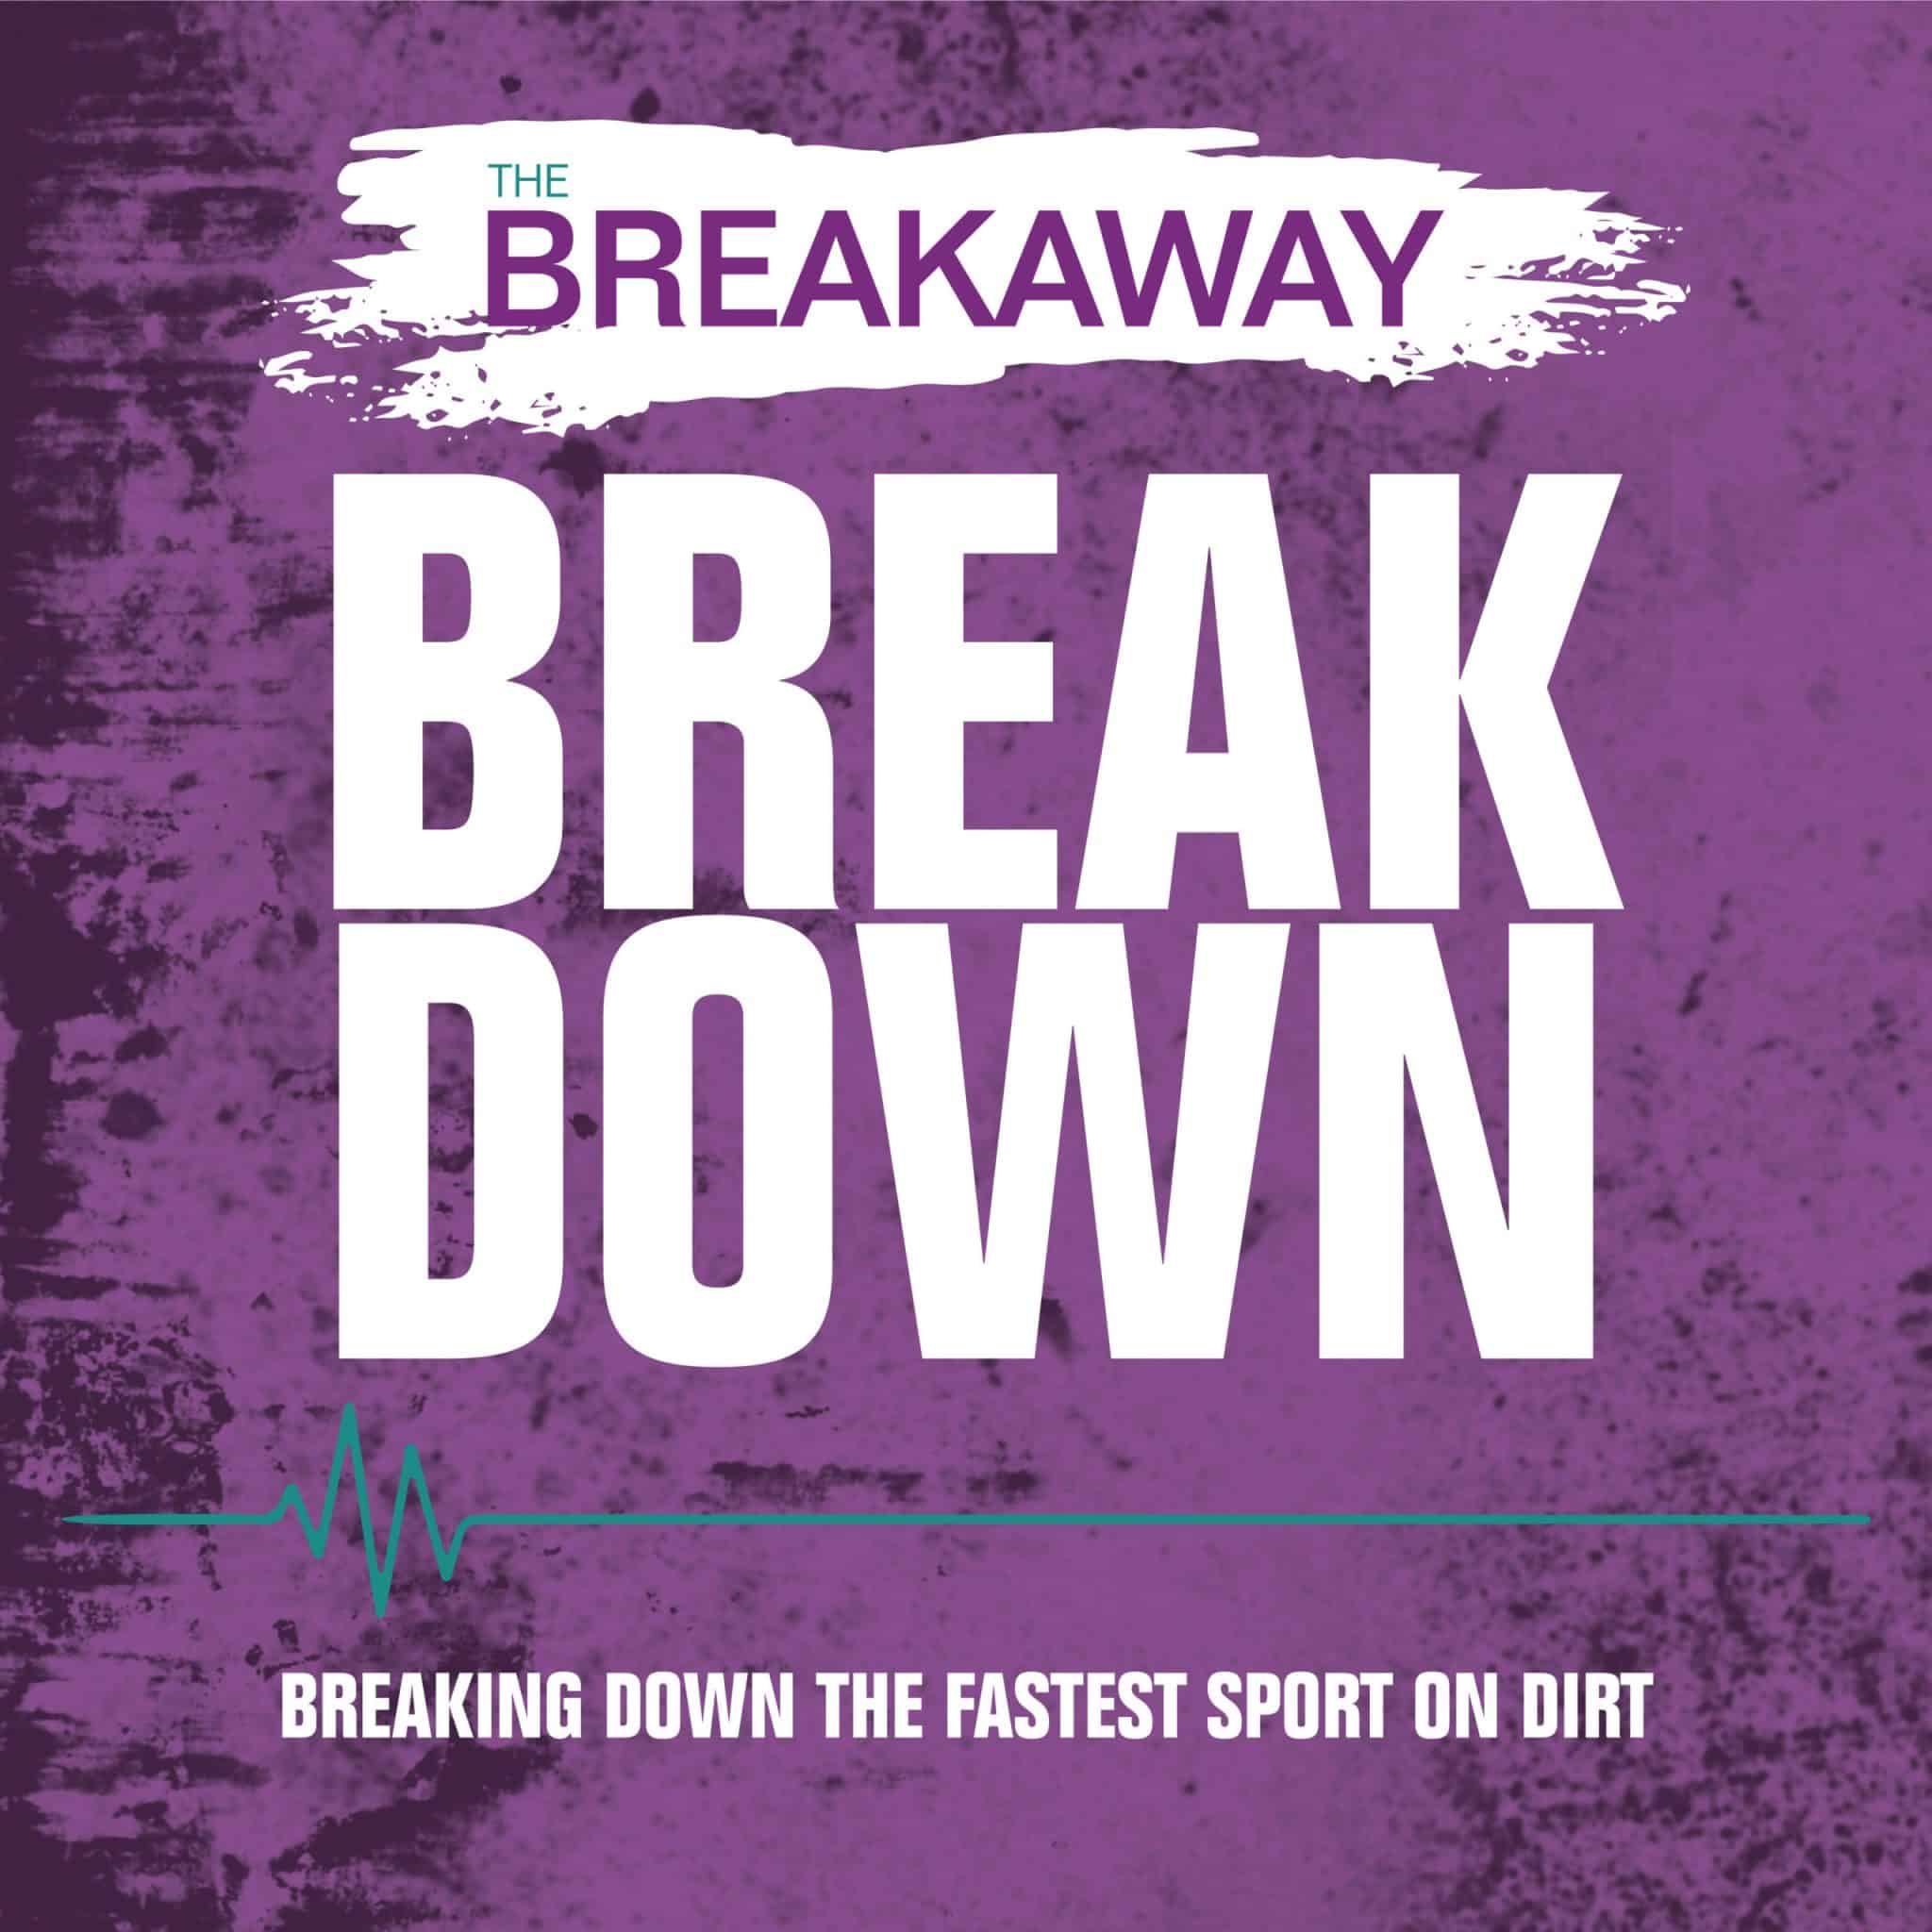 Breakawaybreakdown Cover 3000x3000 2021